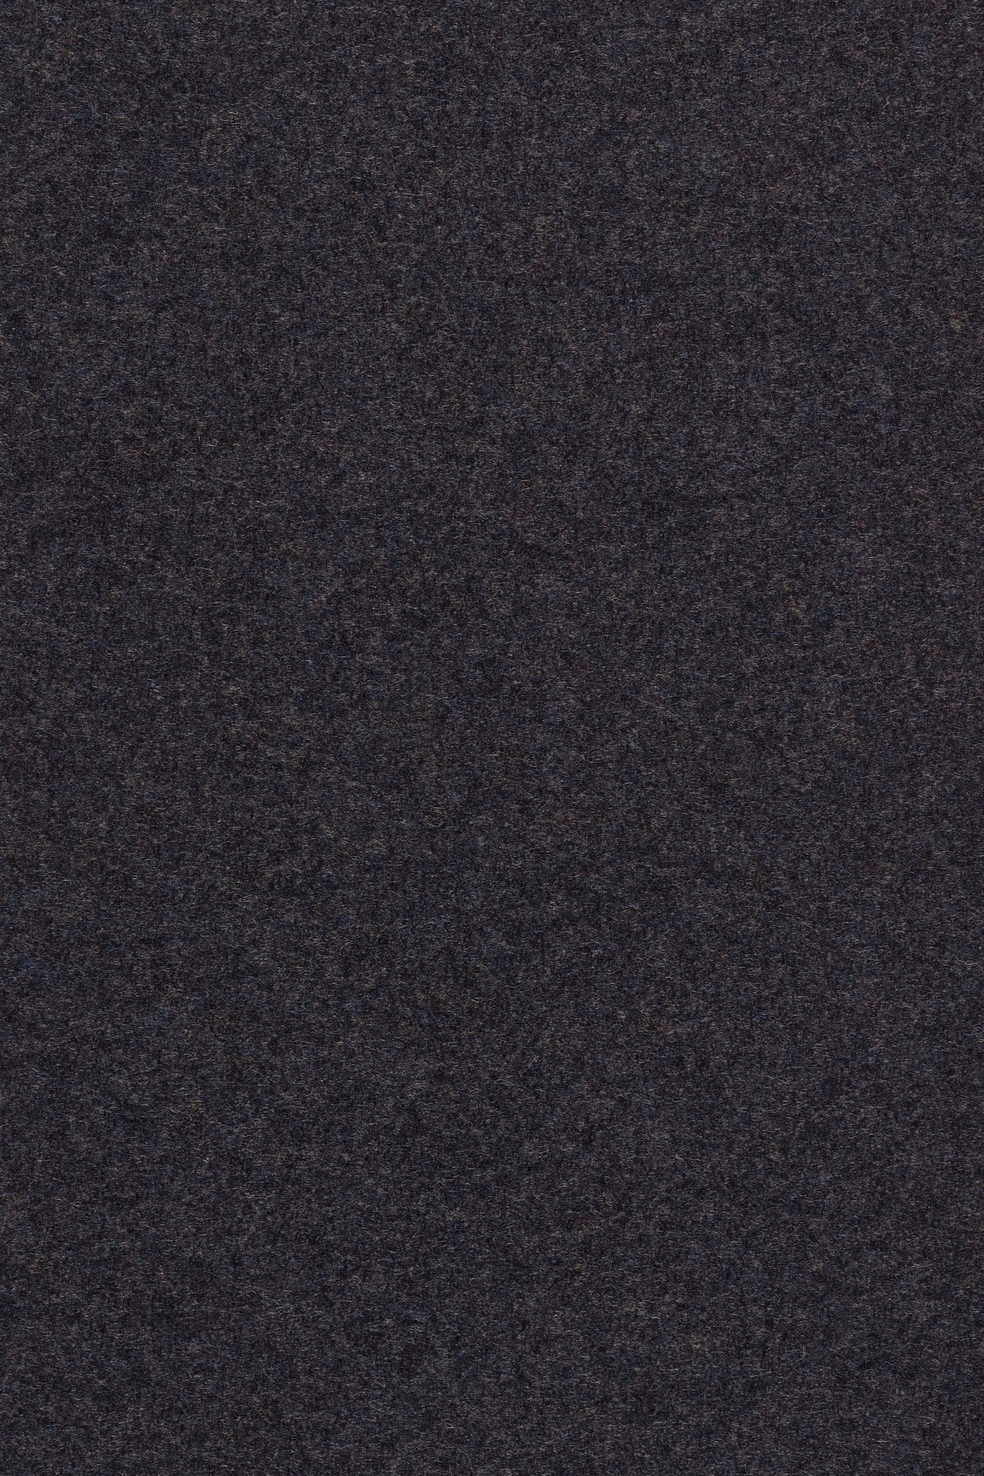 Fabric sample Divina MD 293 black